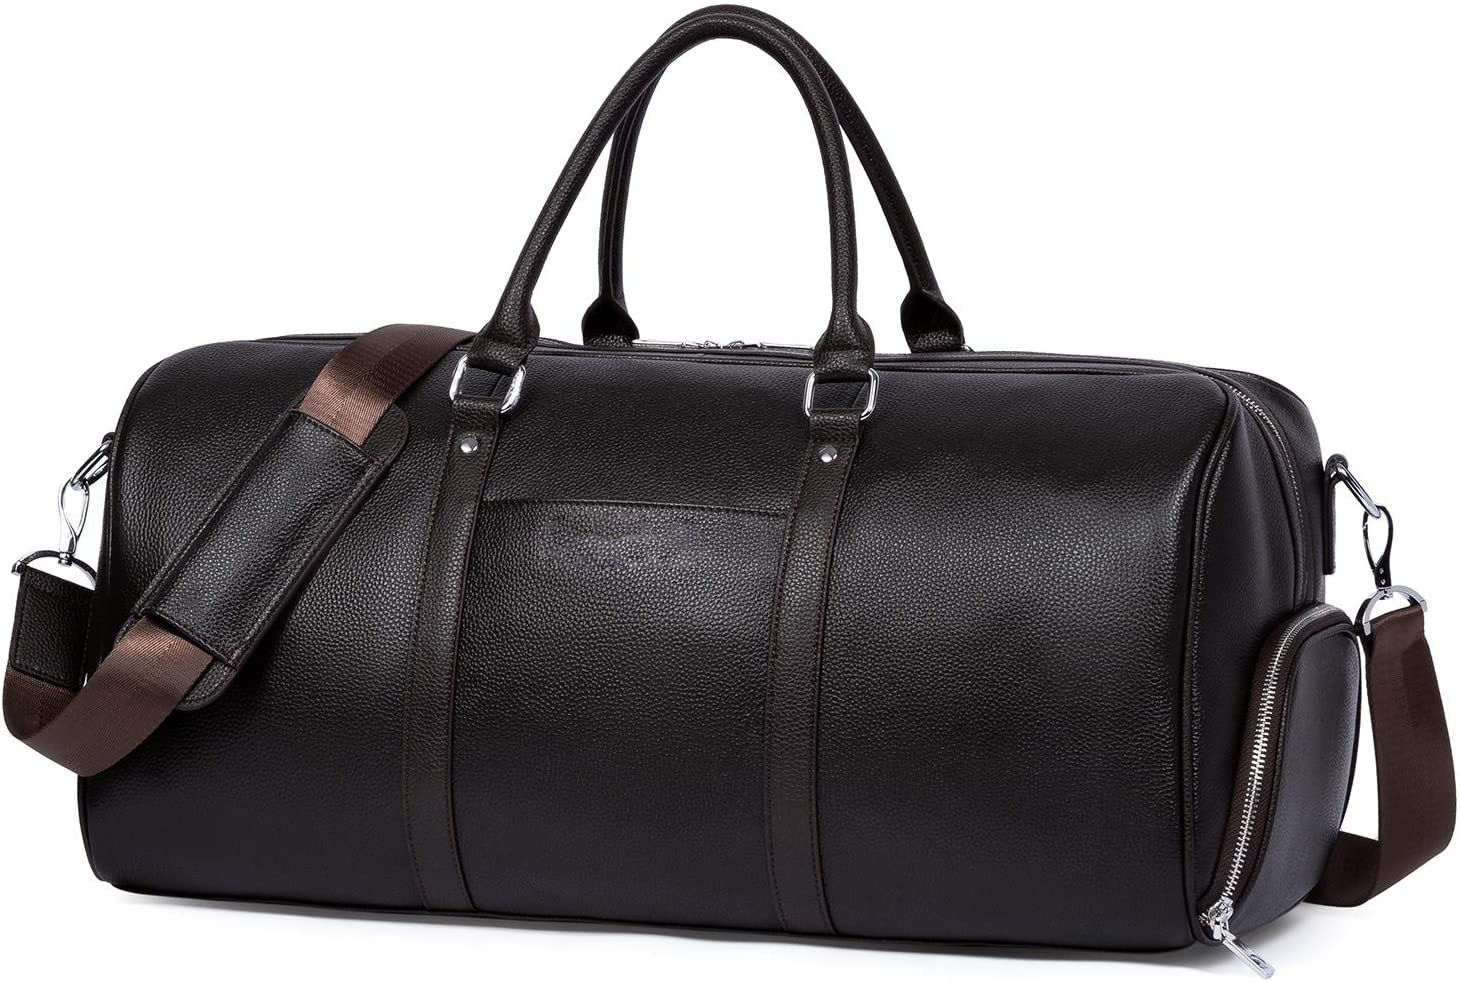 High Quality Leather Travel Duffel Bag Weekender Overnight Bag